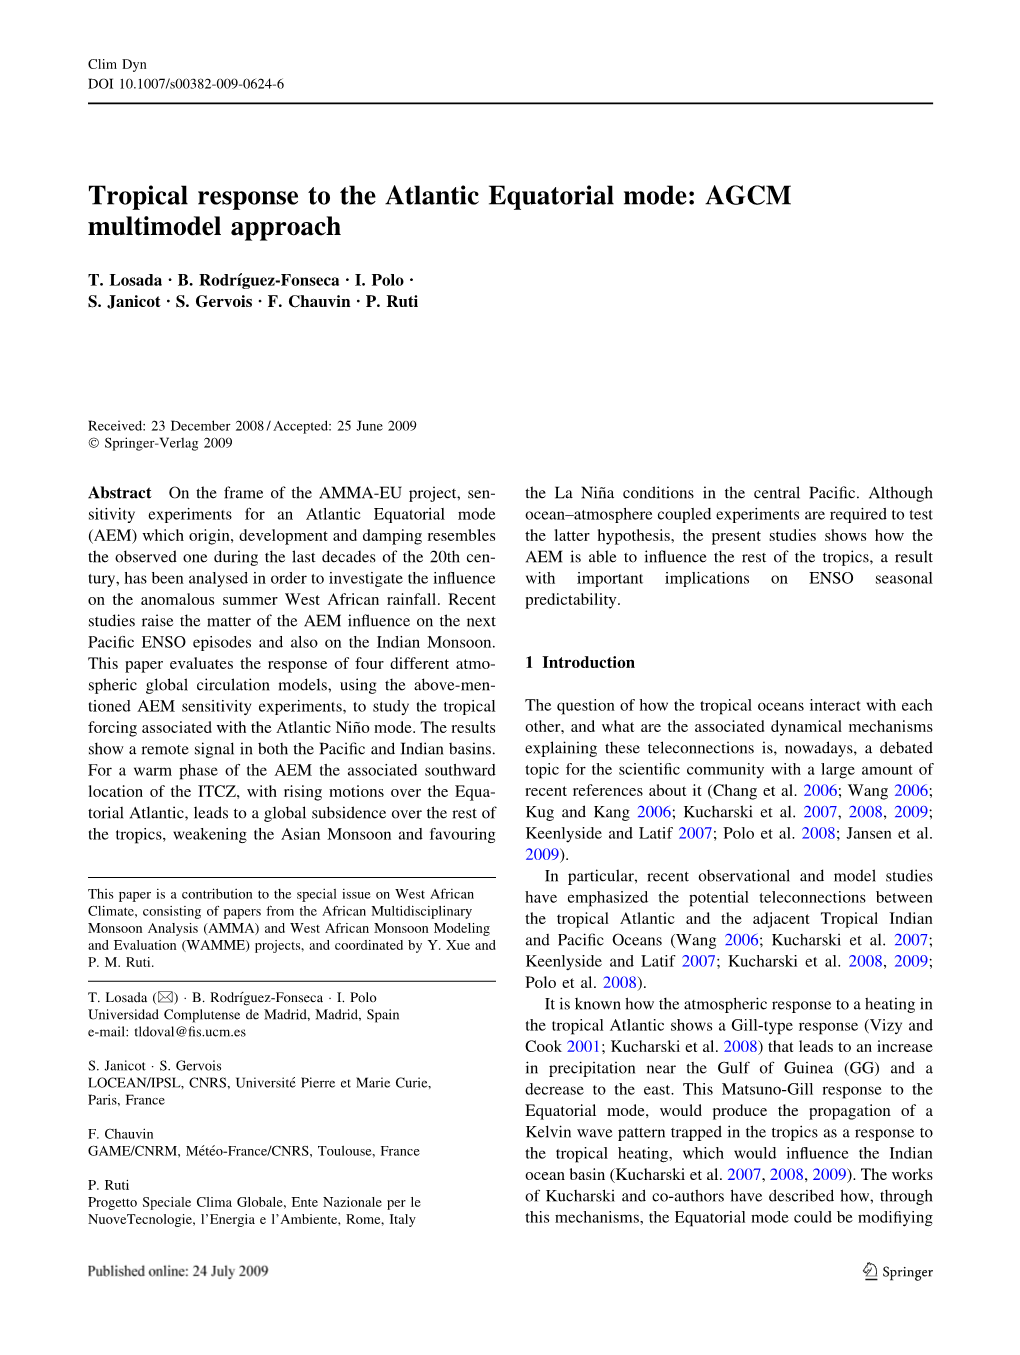 Tropical Response to the Atlantic Equatorial Mode: AGCM Multimodel Approach